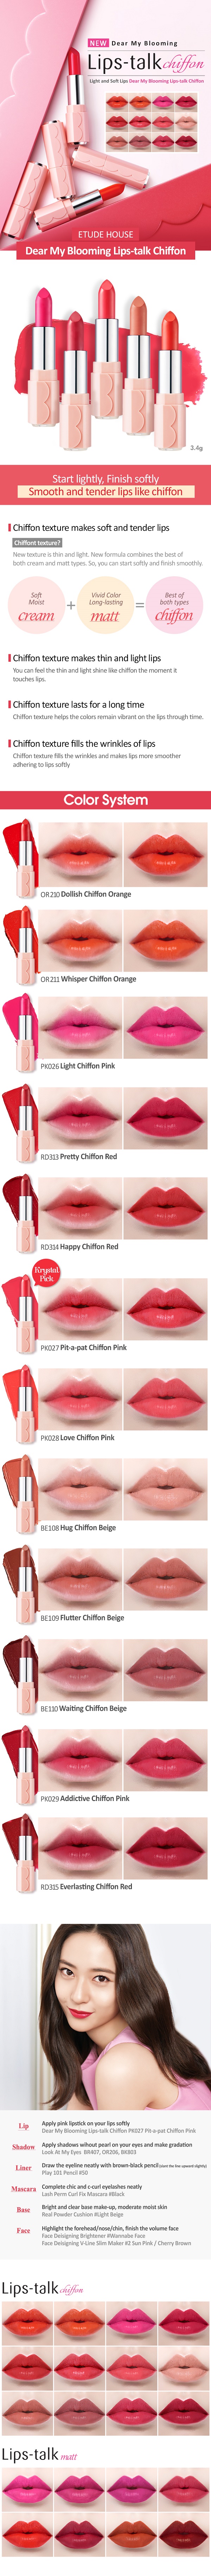 [Etude house]Dear Blooming Lips-Talk Chiffon #PK028 Love Chiffon Pink 3.4g